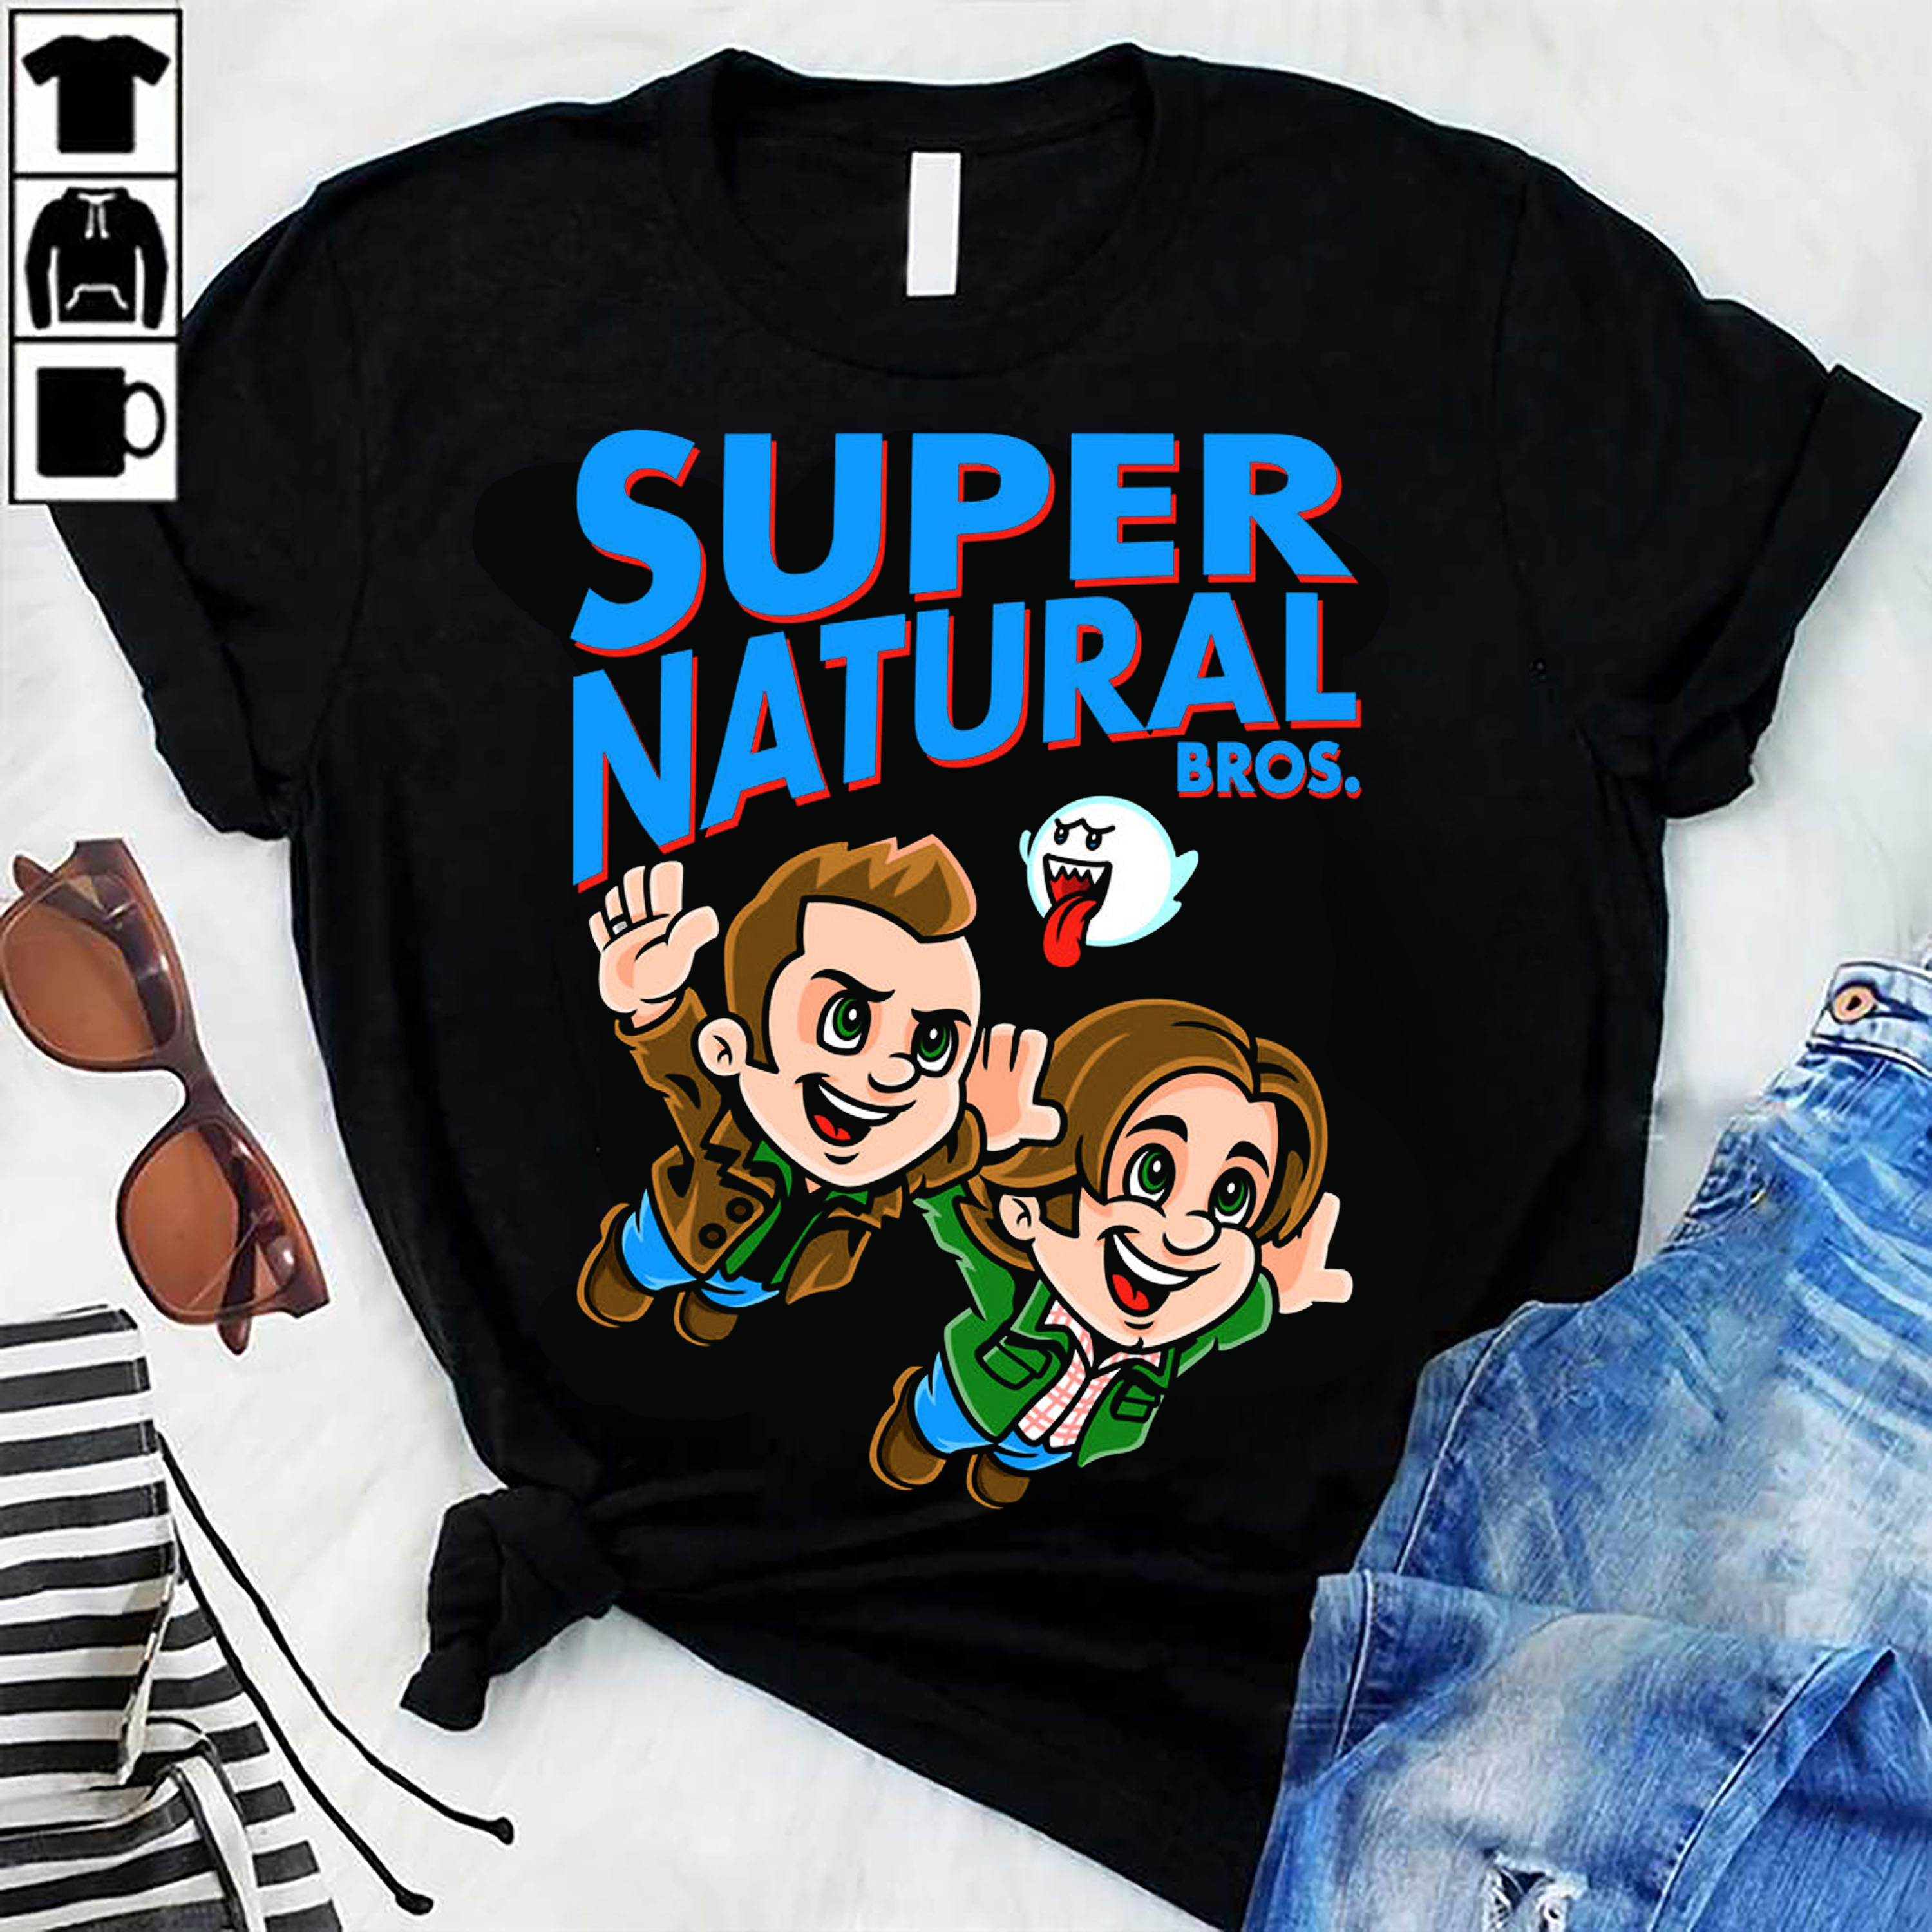 Super Natural Bros Shirt, Funny Super Natural Shirt